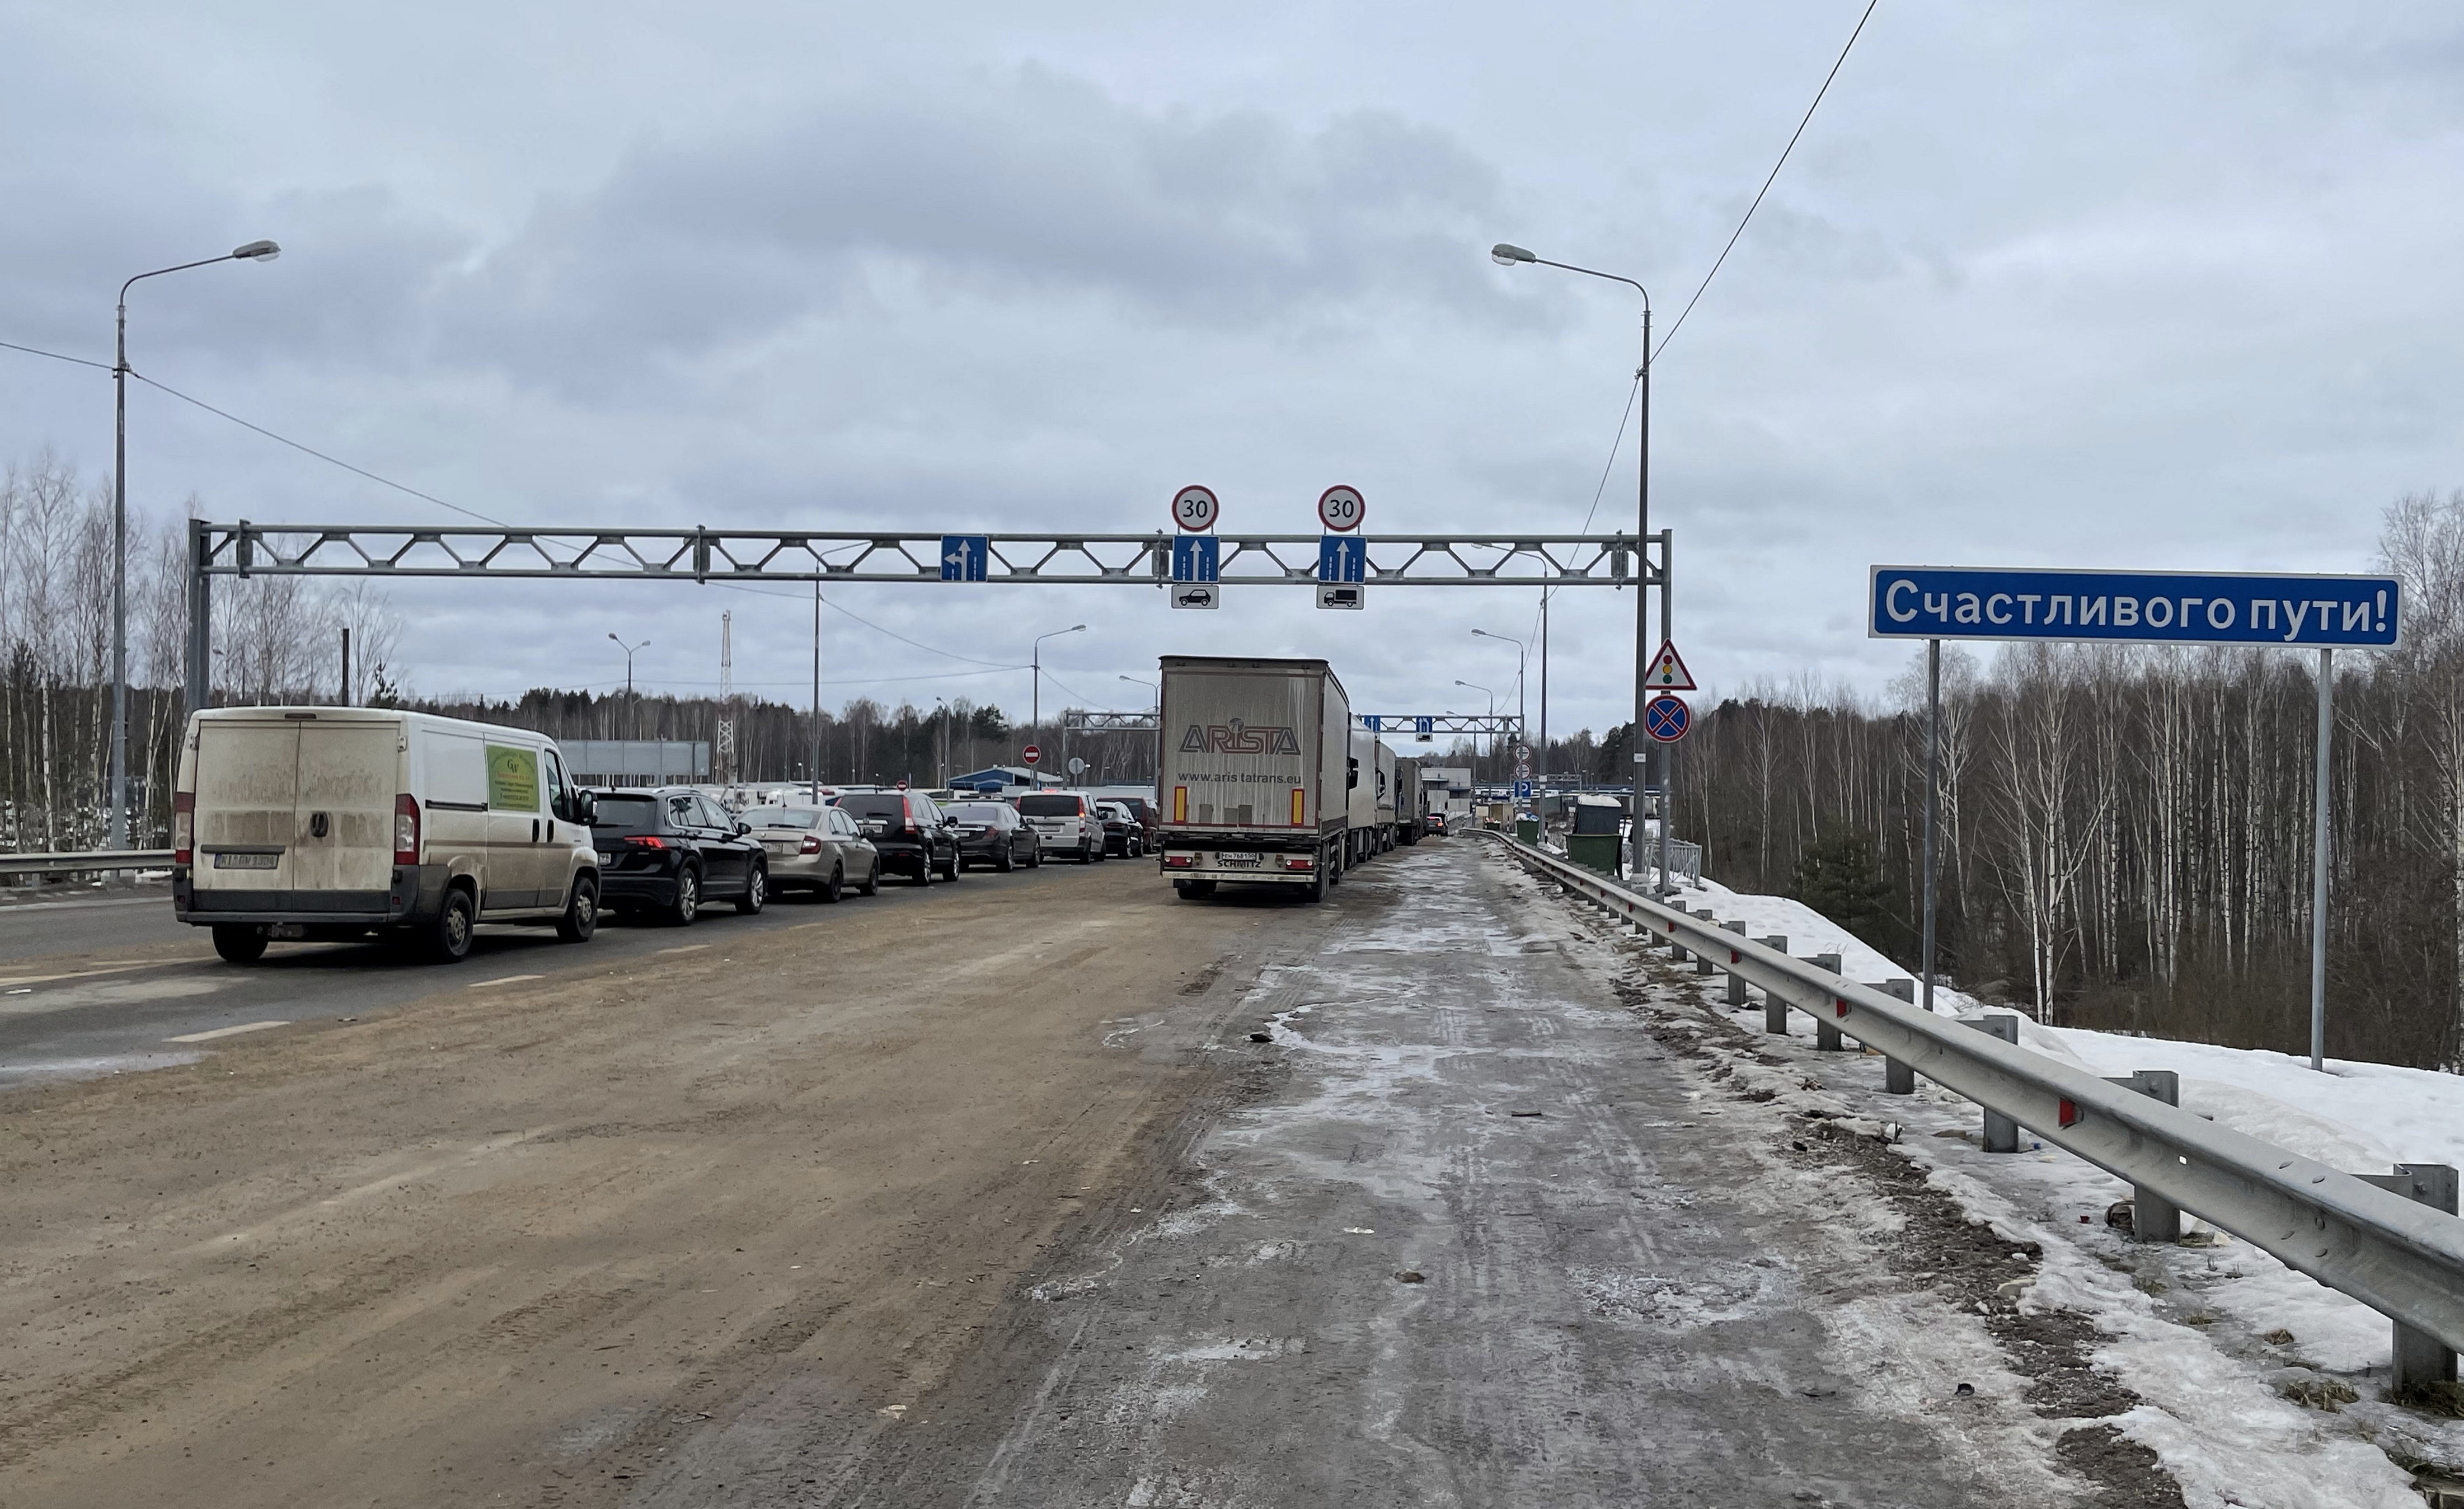 Burachki-Terehova border crossing on the Russian-Lavian border